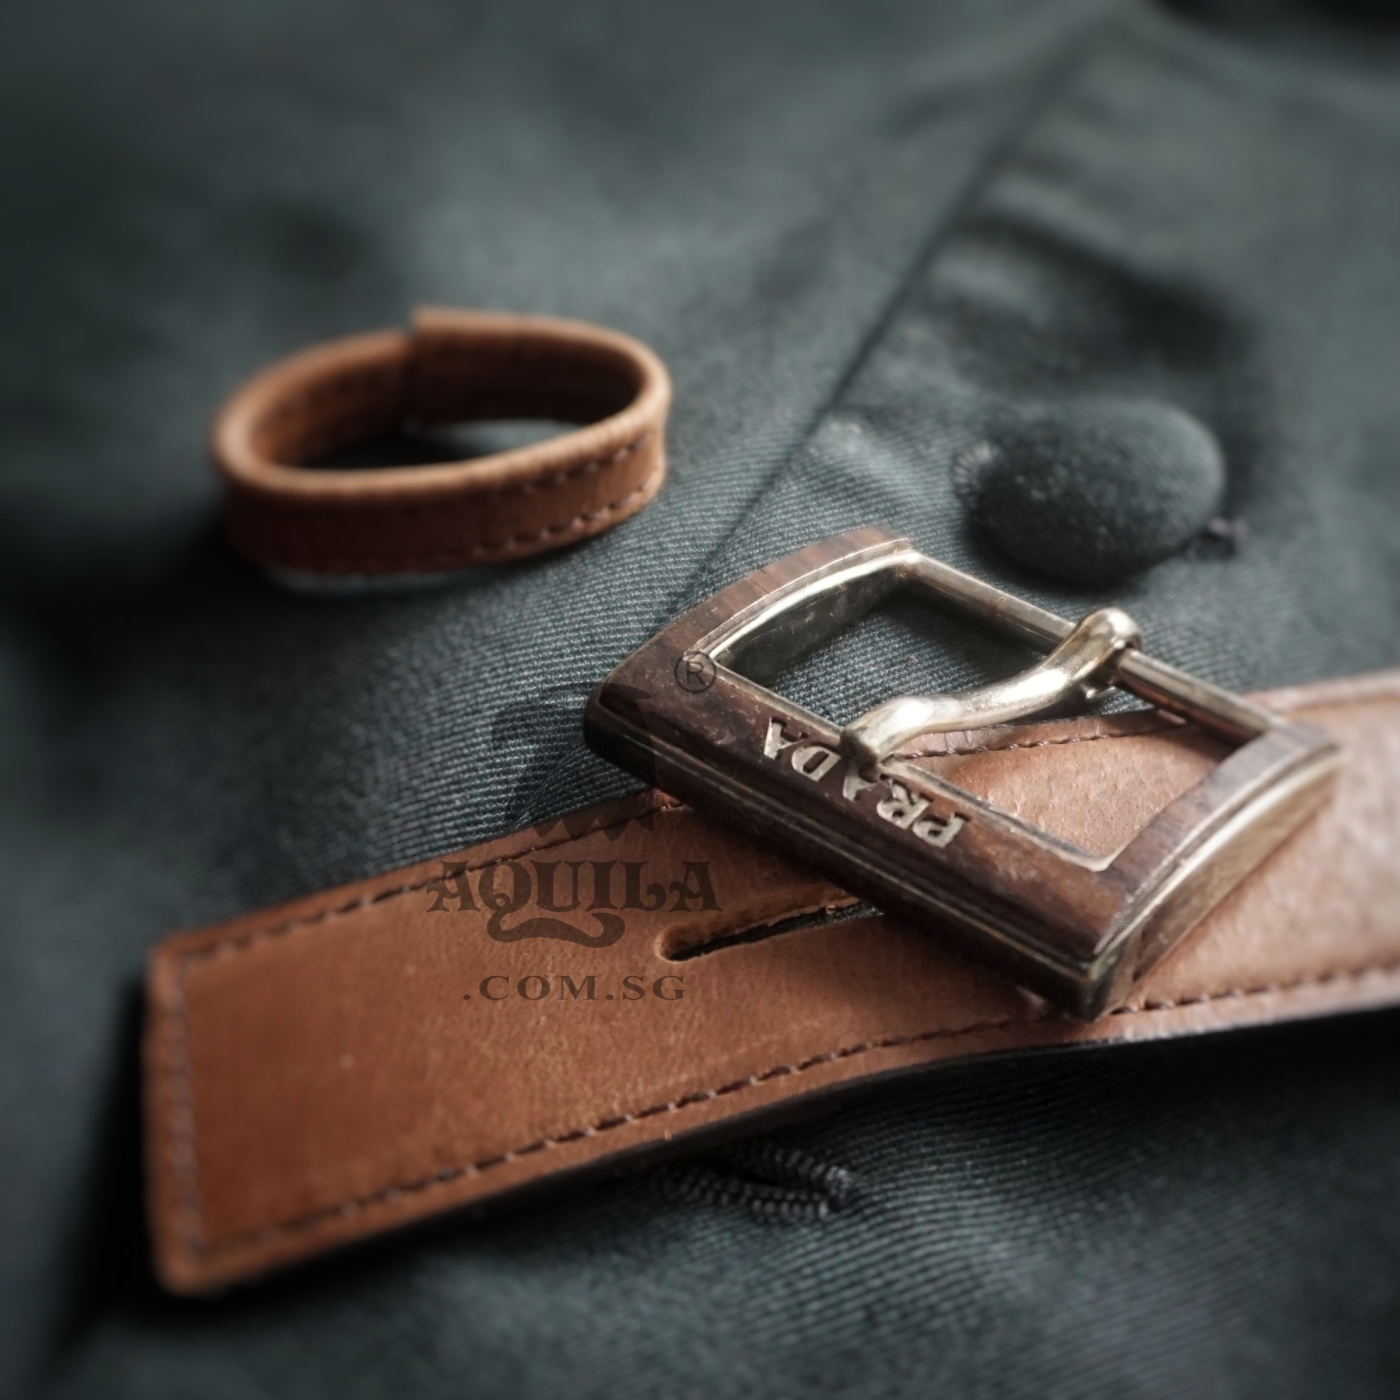 prada leather belt strap replacement